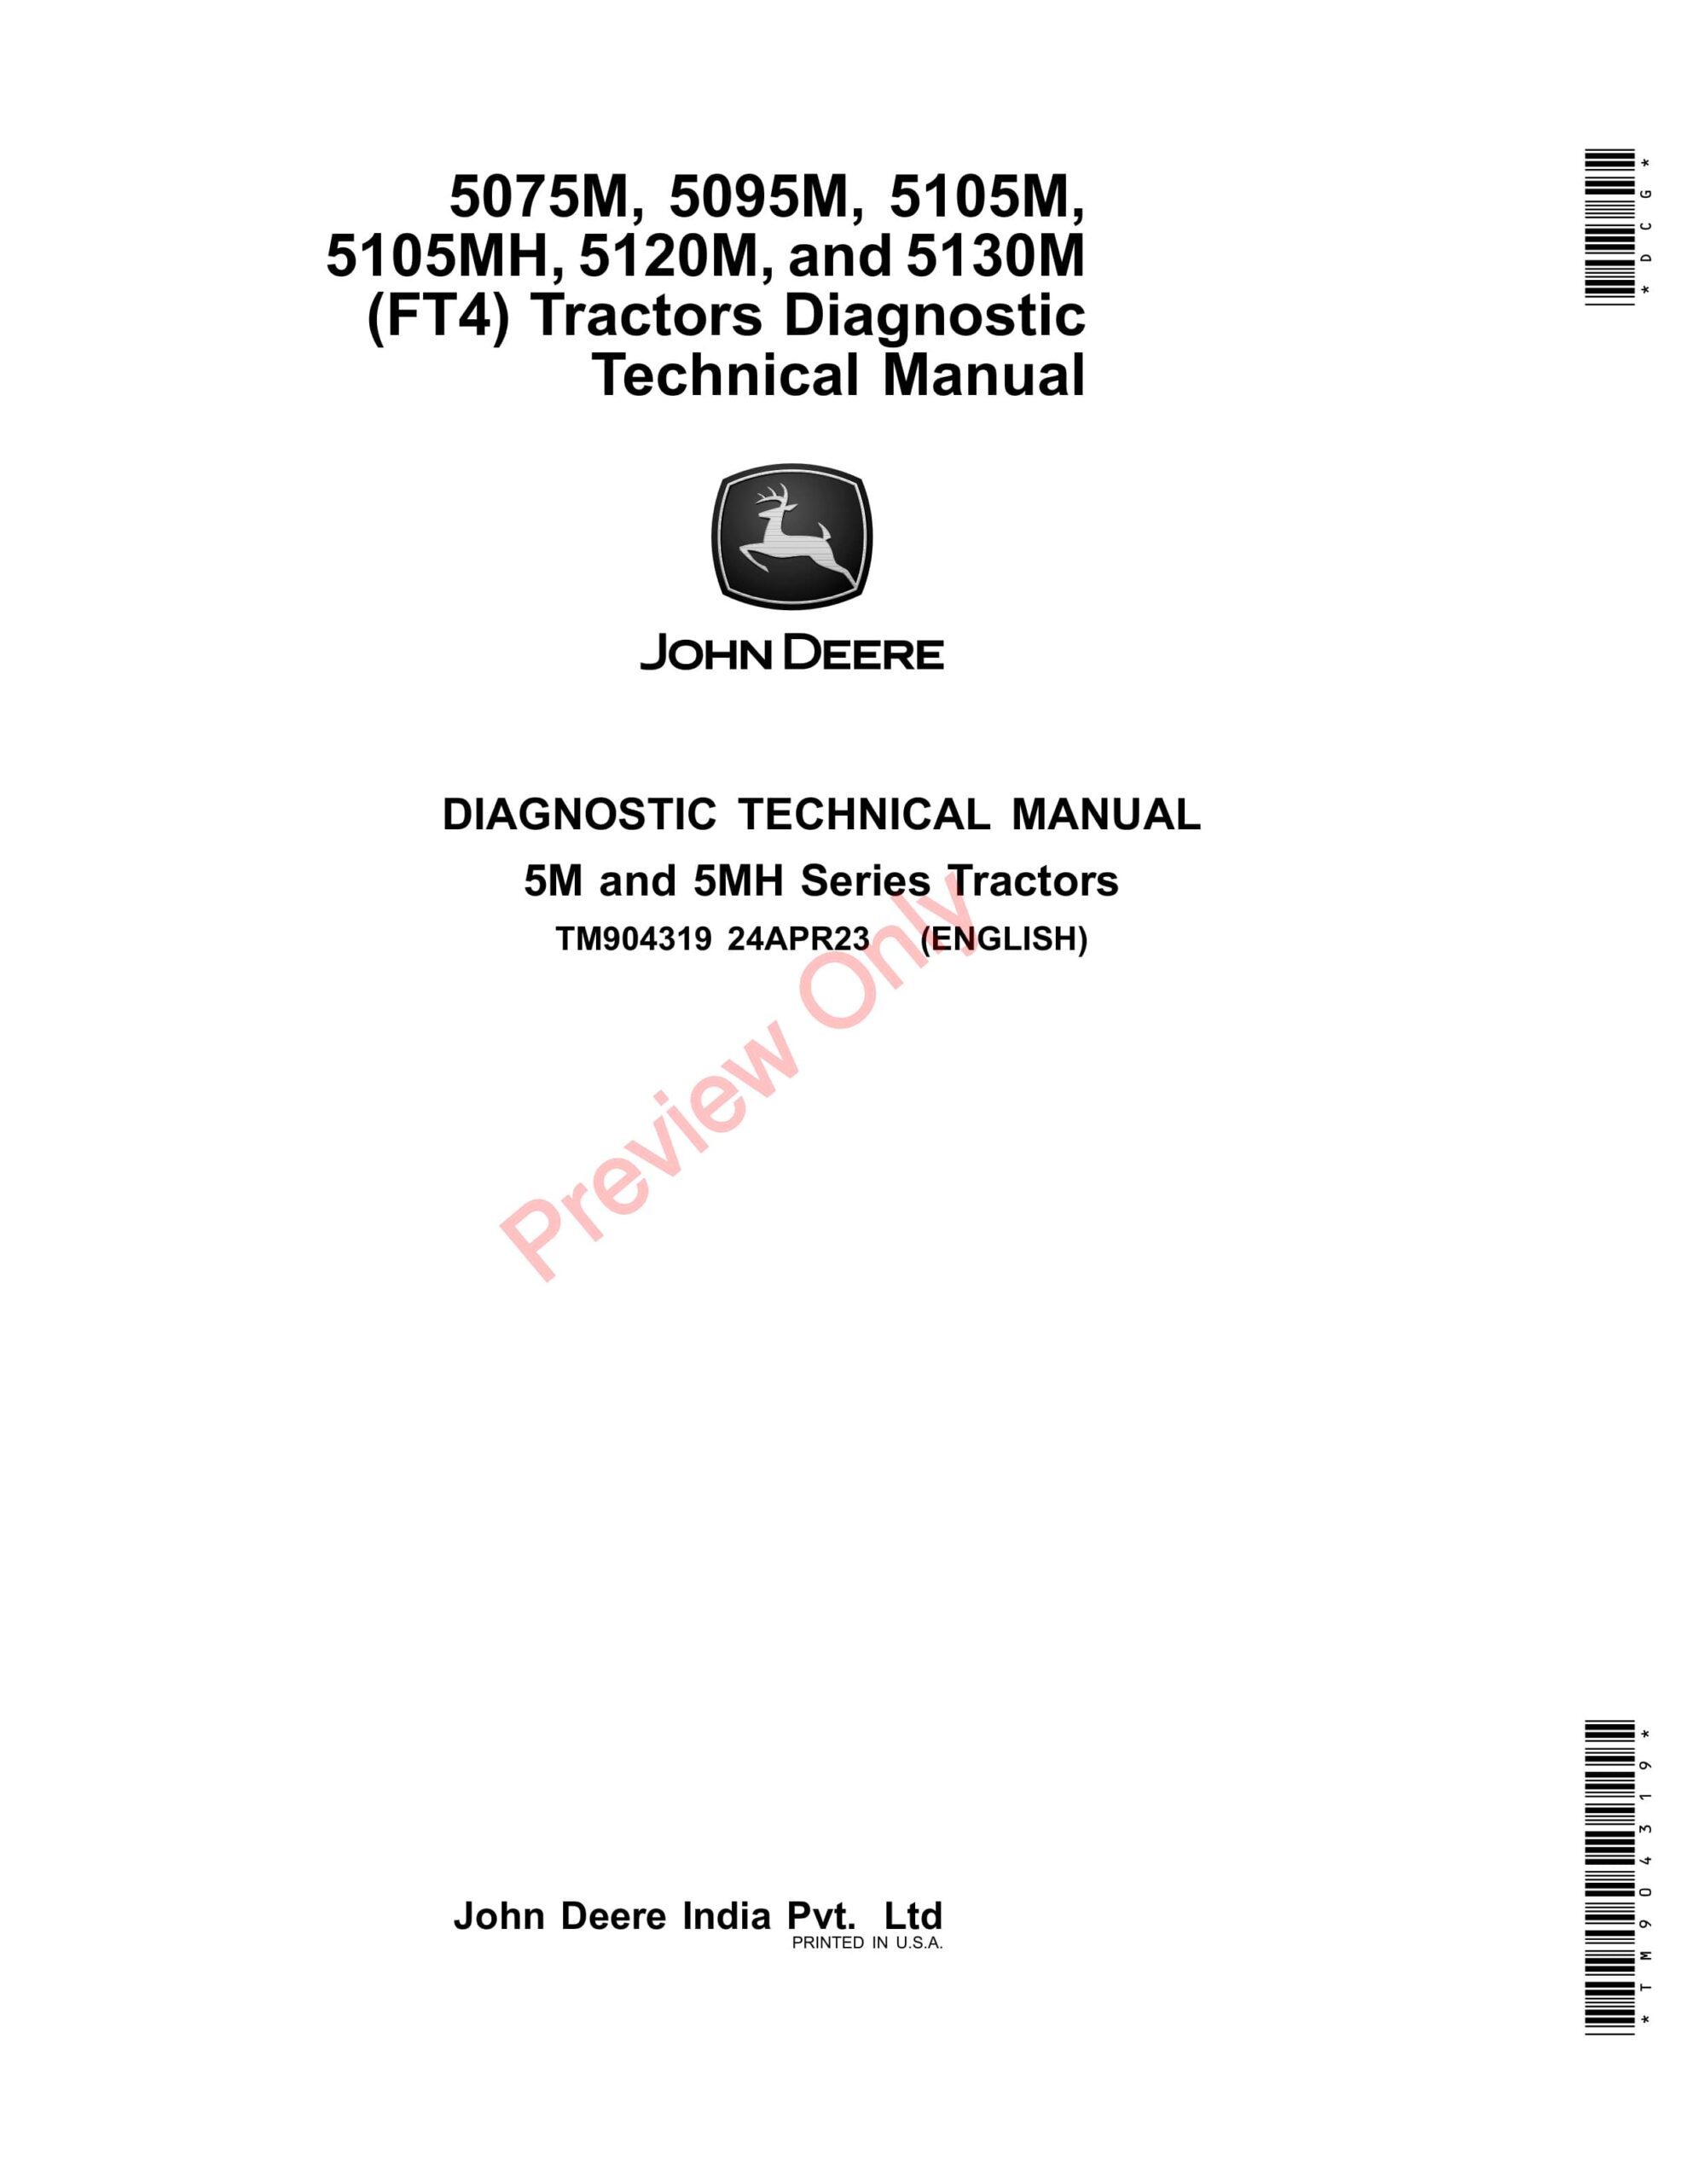 John Deere 5075M, 5095M, 5105M, 5105MH, and 5120M (FT4) Tractors Diagnostic Technical Manual TM904319 24APR23-1